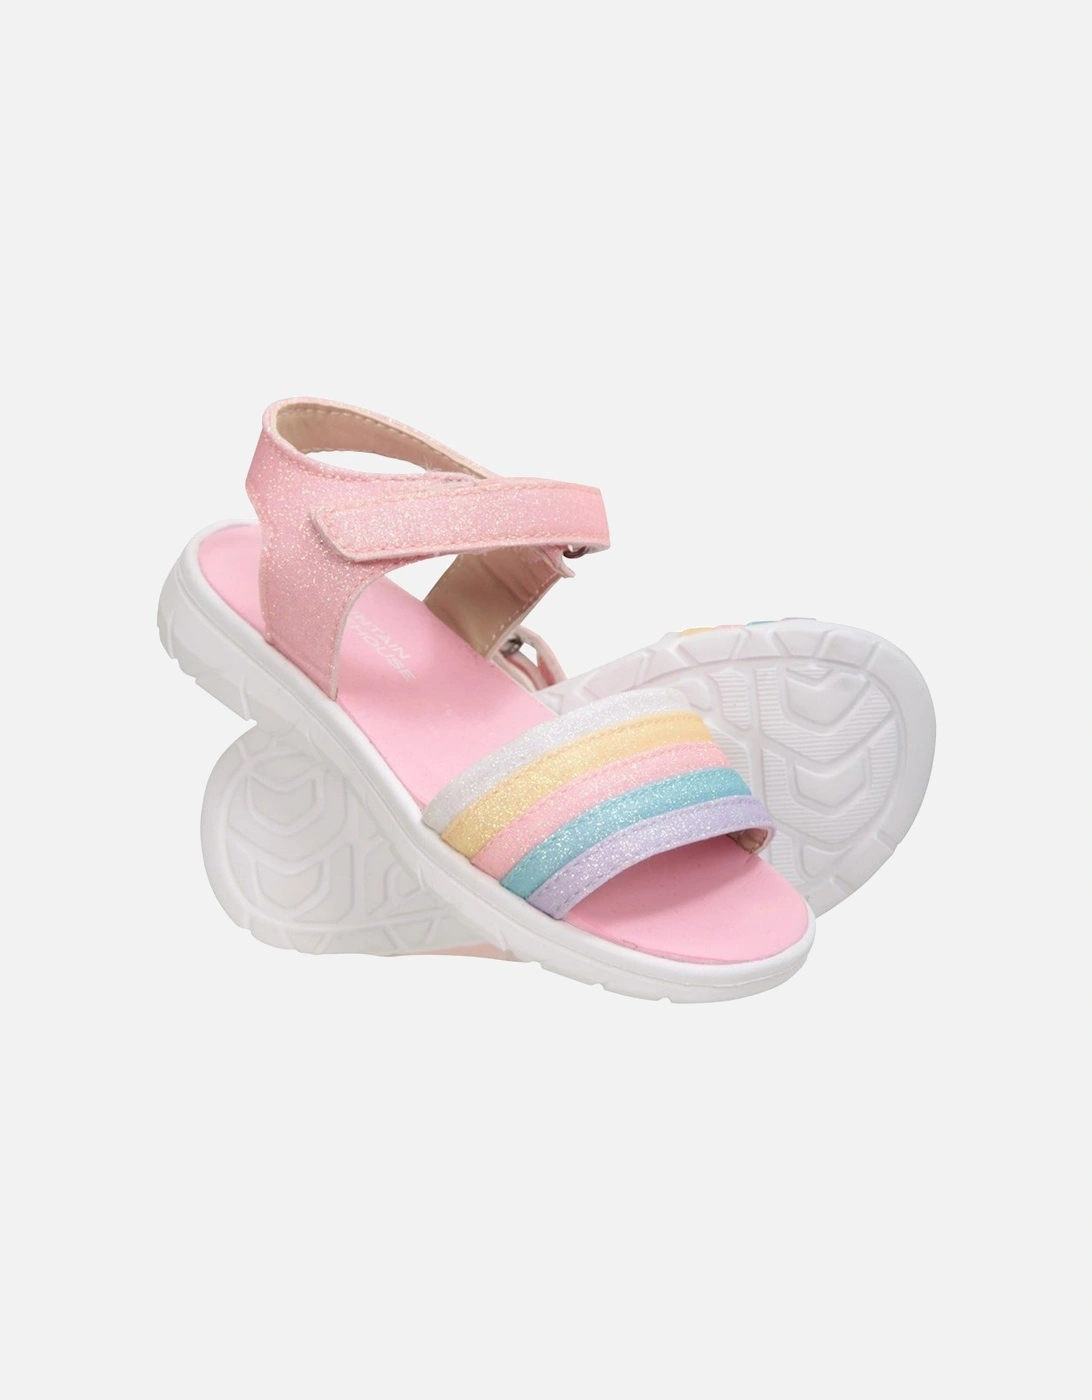 Girls Rainbow Leather Sandals